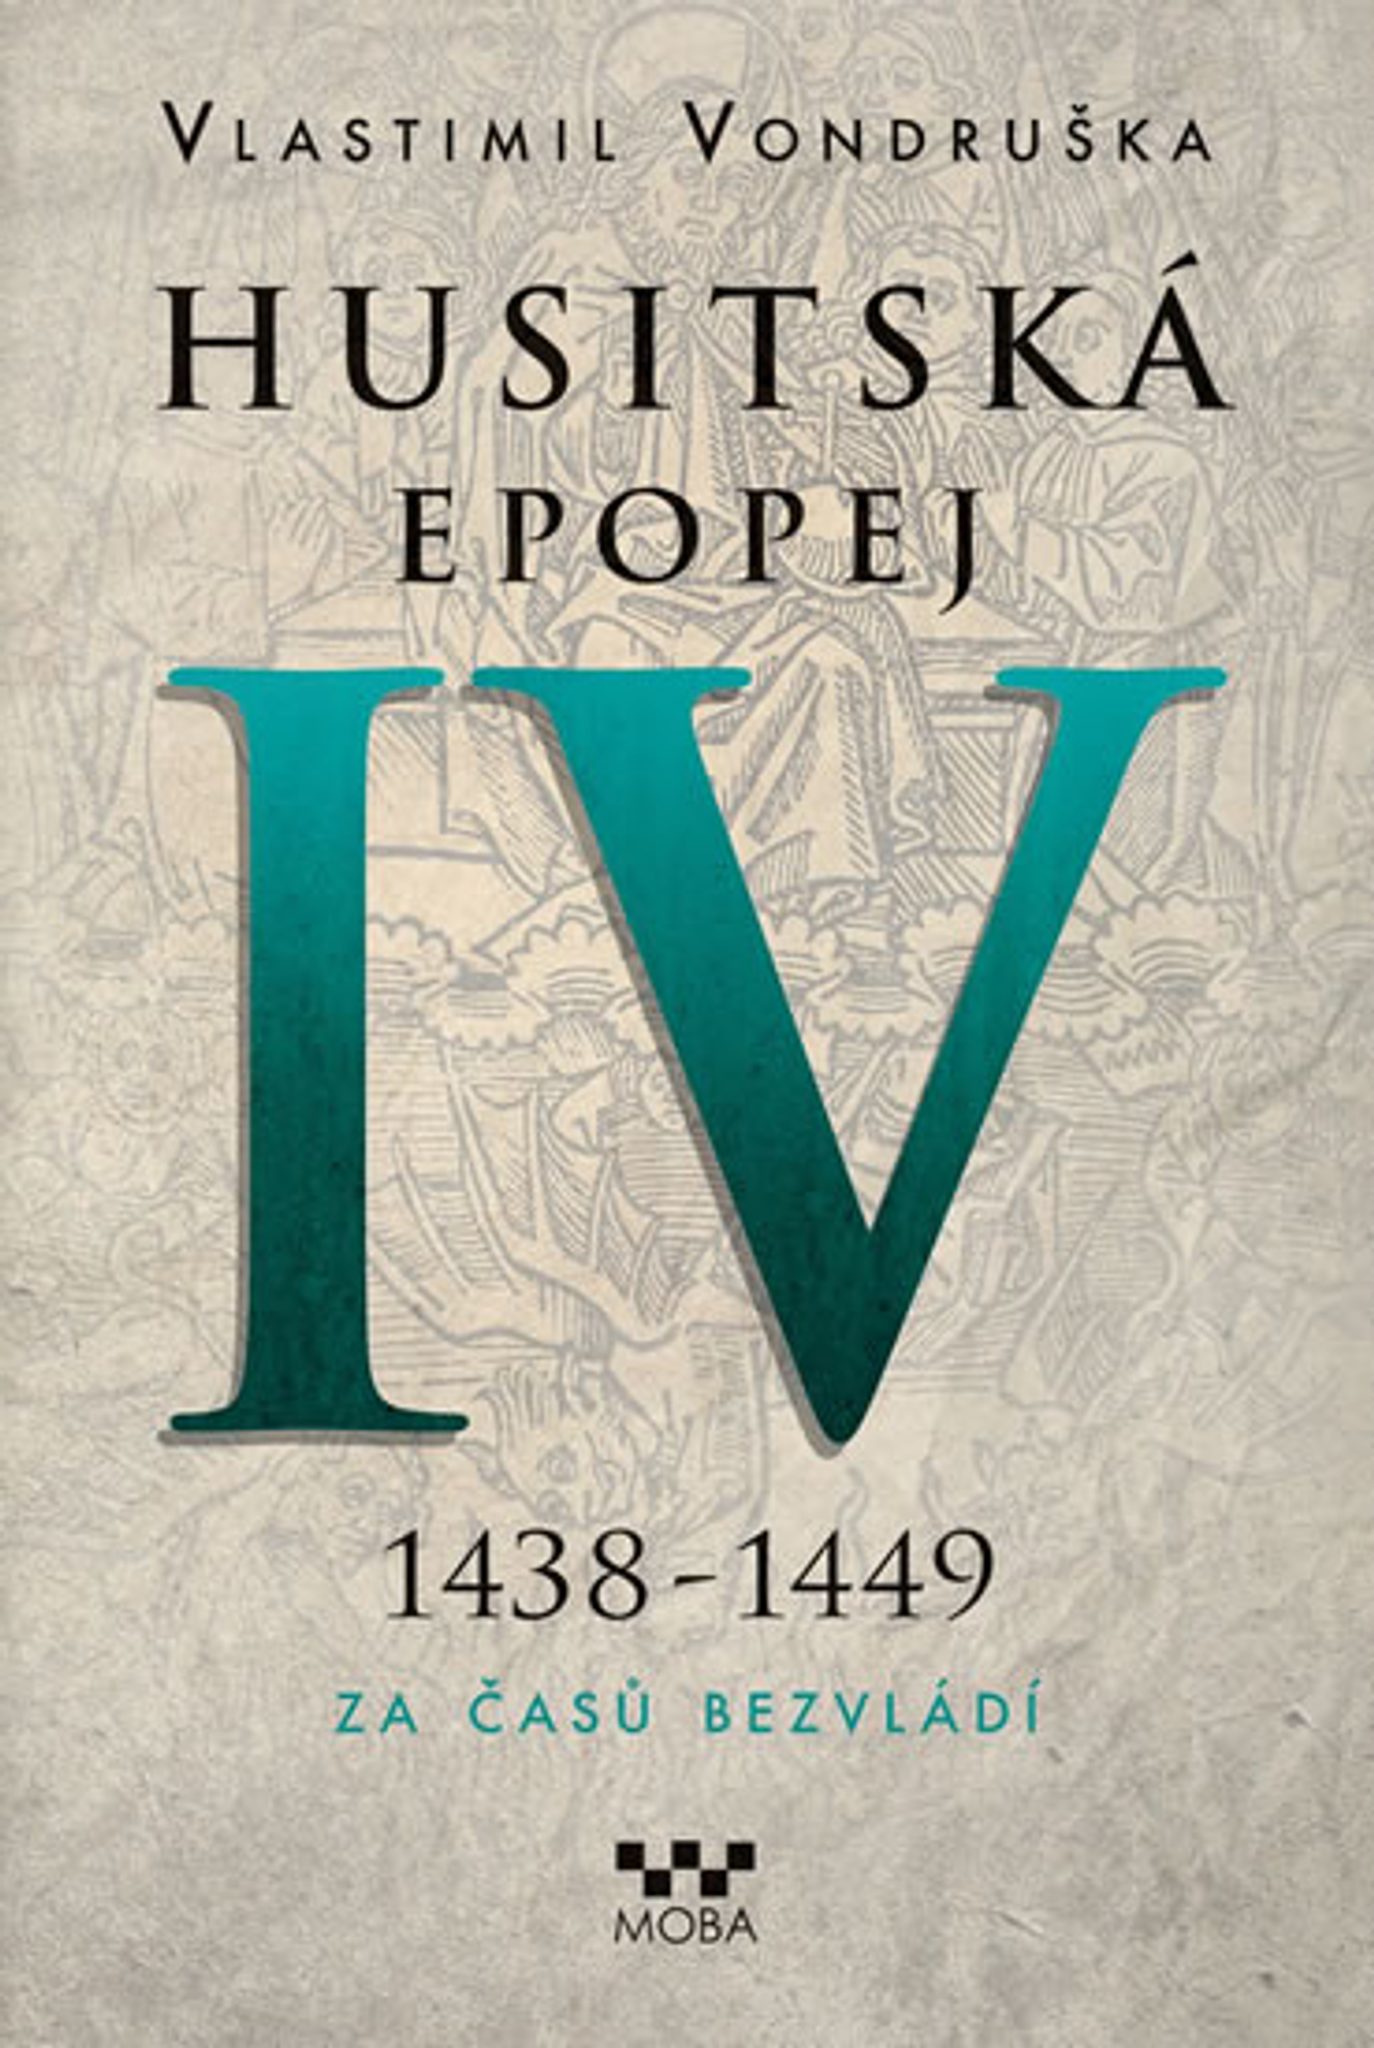 Husitsk epopej IV (1438-1449)